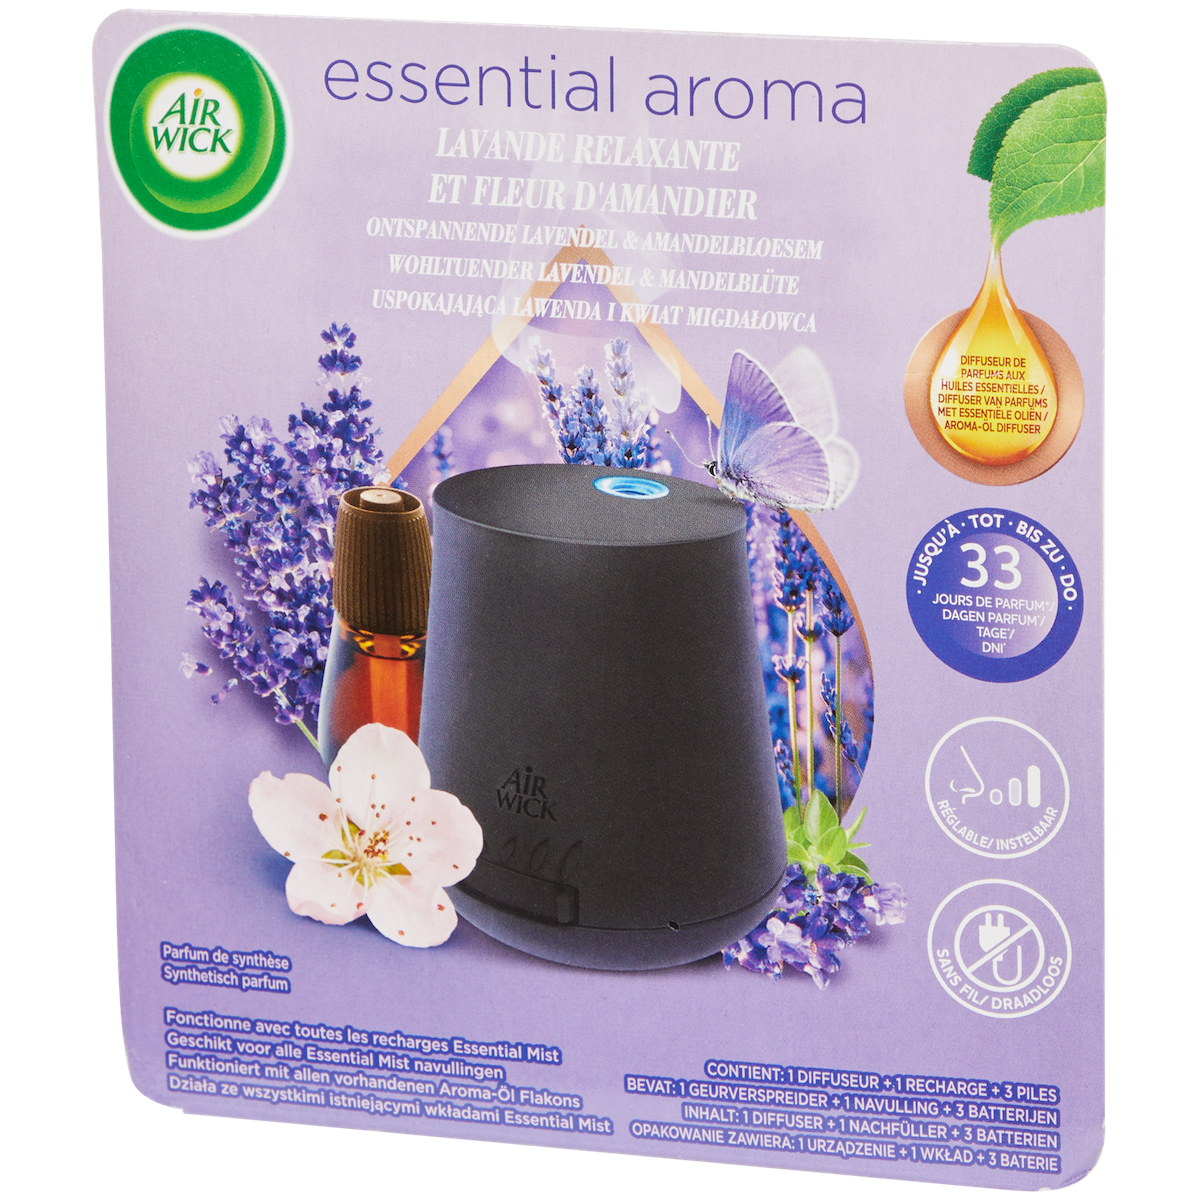 Air Wick Essential Aroma Öl-Duft Diffuser

Lavendel & Mandelblüten